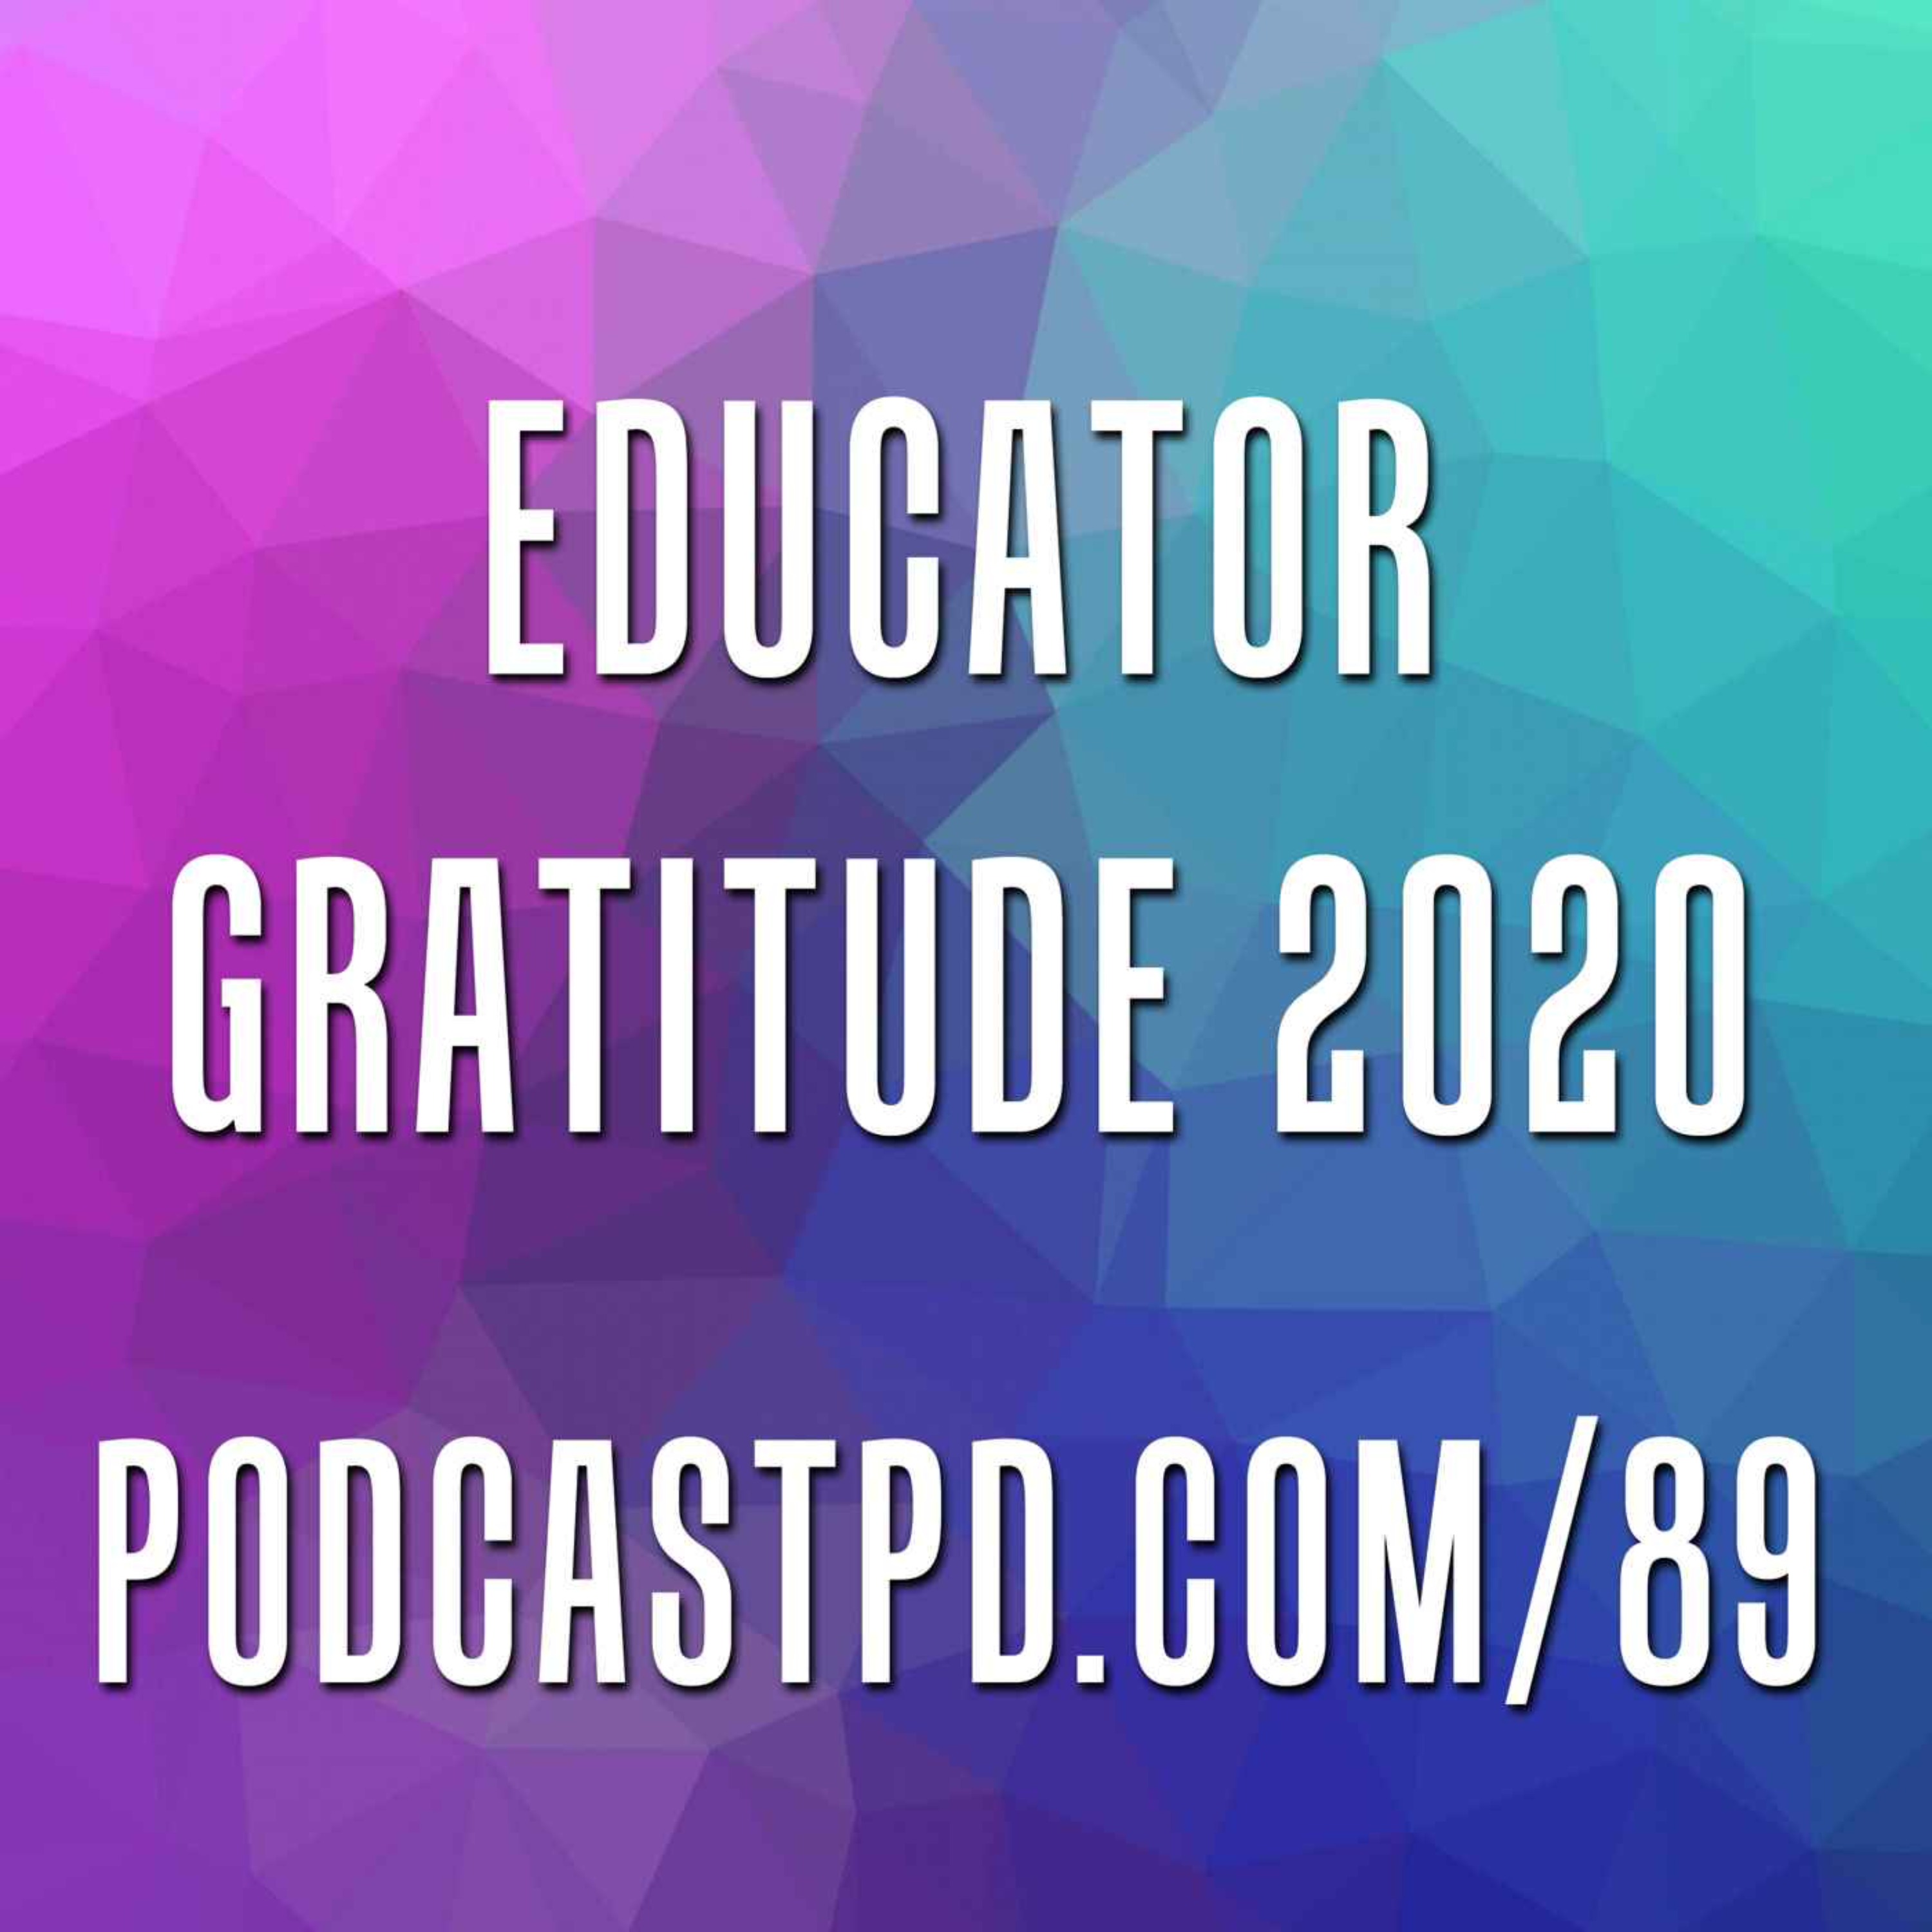 Educator Gratitude 2020 - PPD089 Image